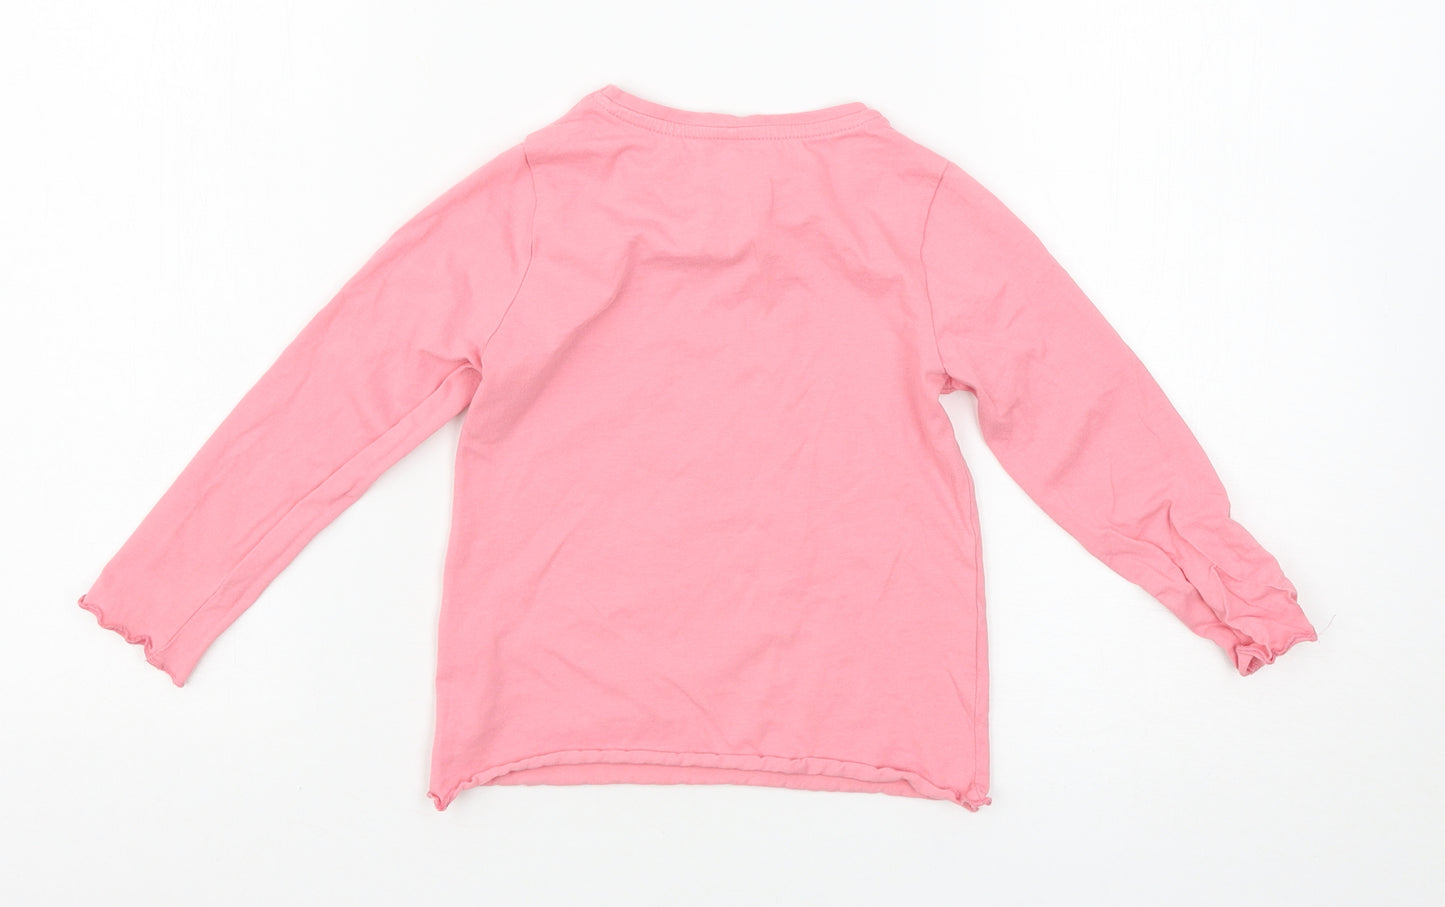 George Girls Pink Solid  Top Pyjama Top Size 3-4 Years